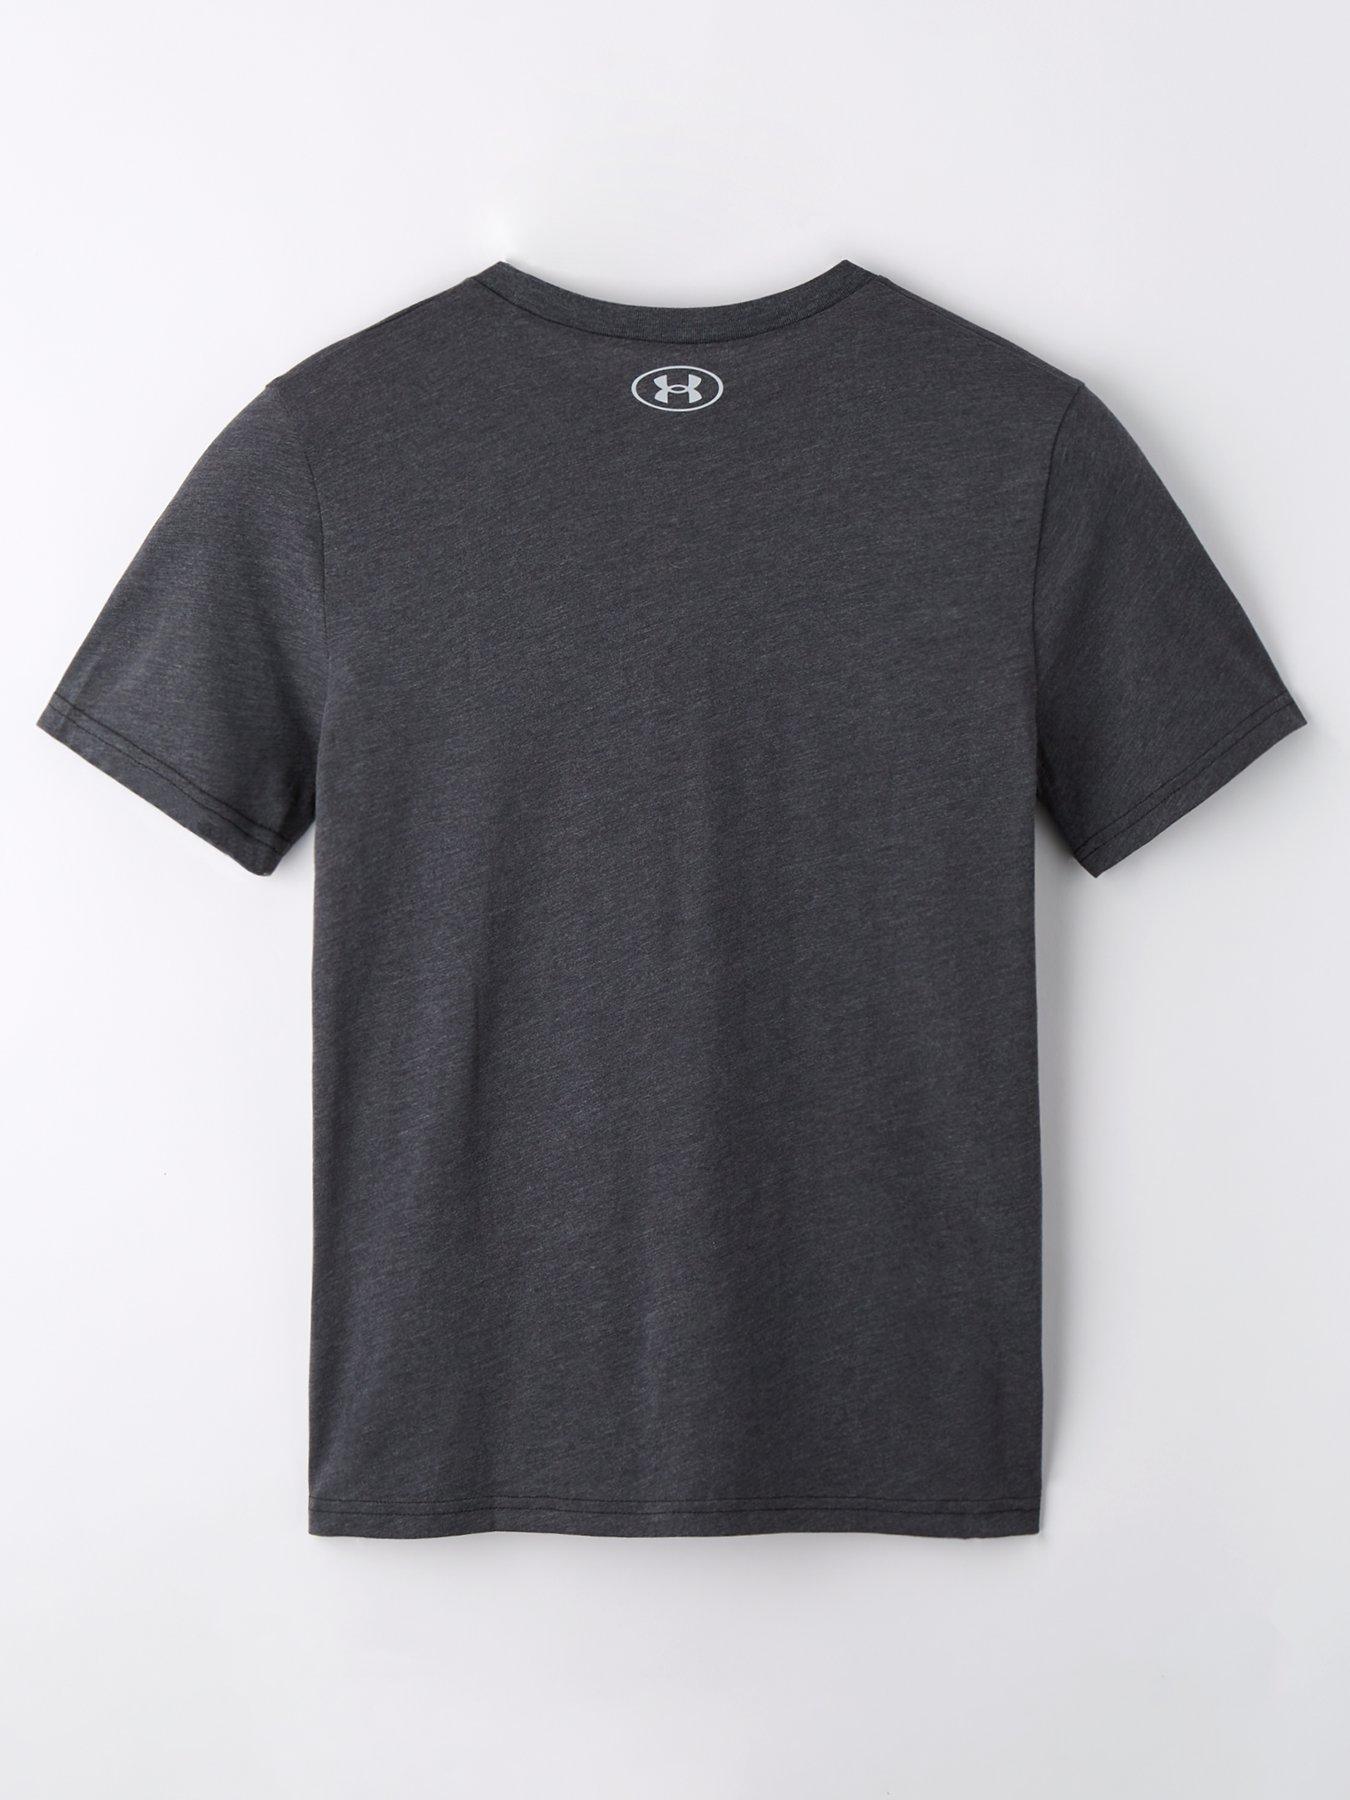 UNDER ARMOUR Junior Boys Logo Wordmark Short Sleeve T-Shirt - Grey/White